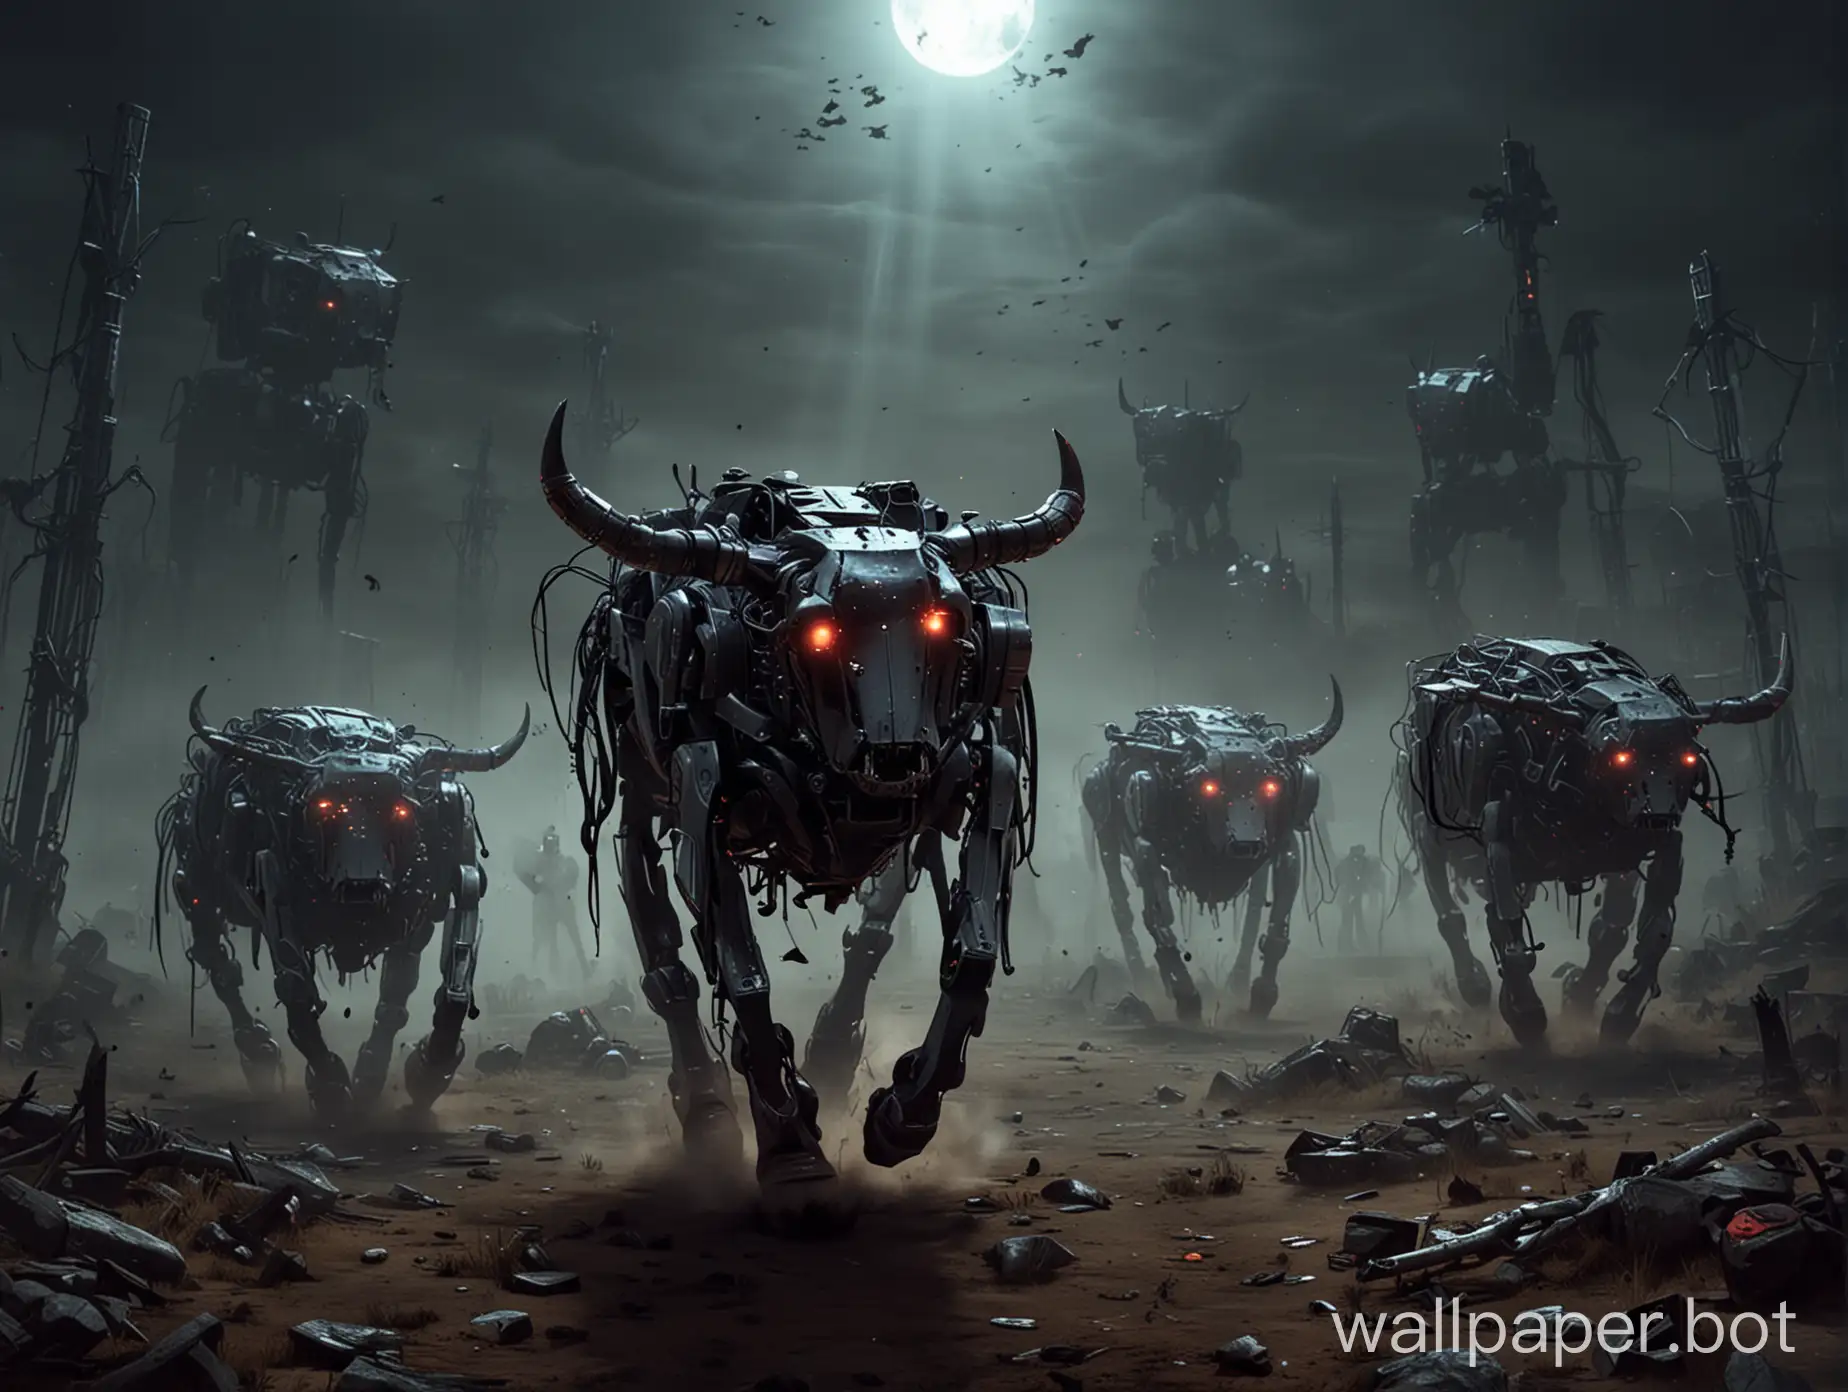 Fearsome-Encounter-Dark-Death-Robot-Cows